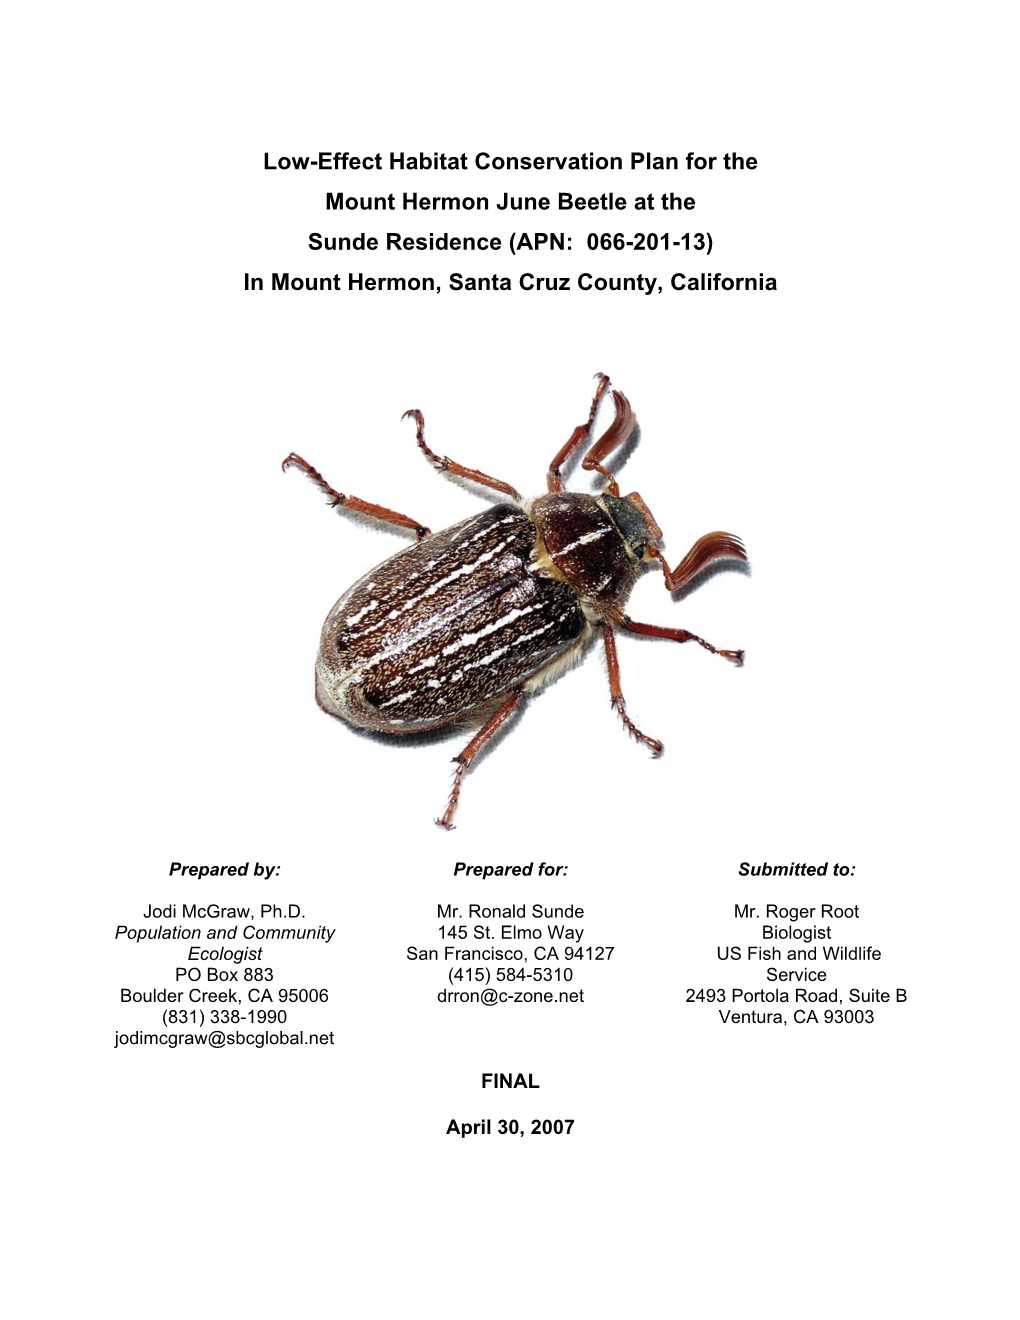 Low-Effect Habitat Conservation Plan for the Mount Hermon June Beetle at the Sunde Residence (APN: 066-201-13) in Mount Hermon, Santa Cruz County, California